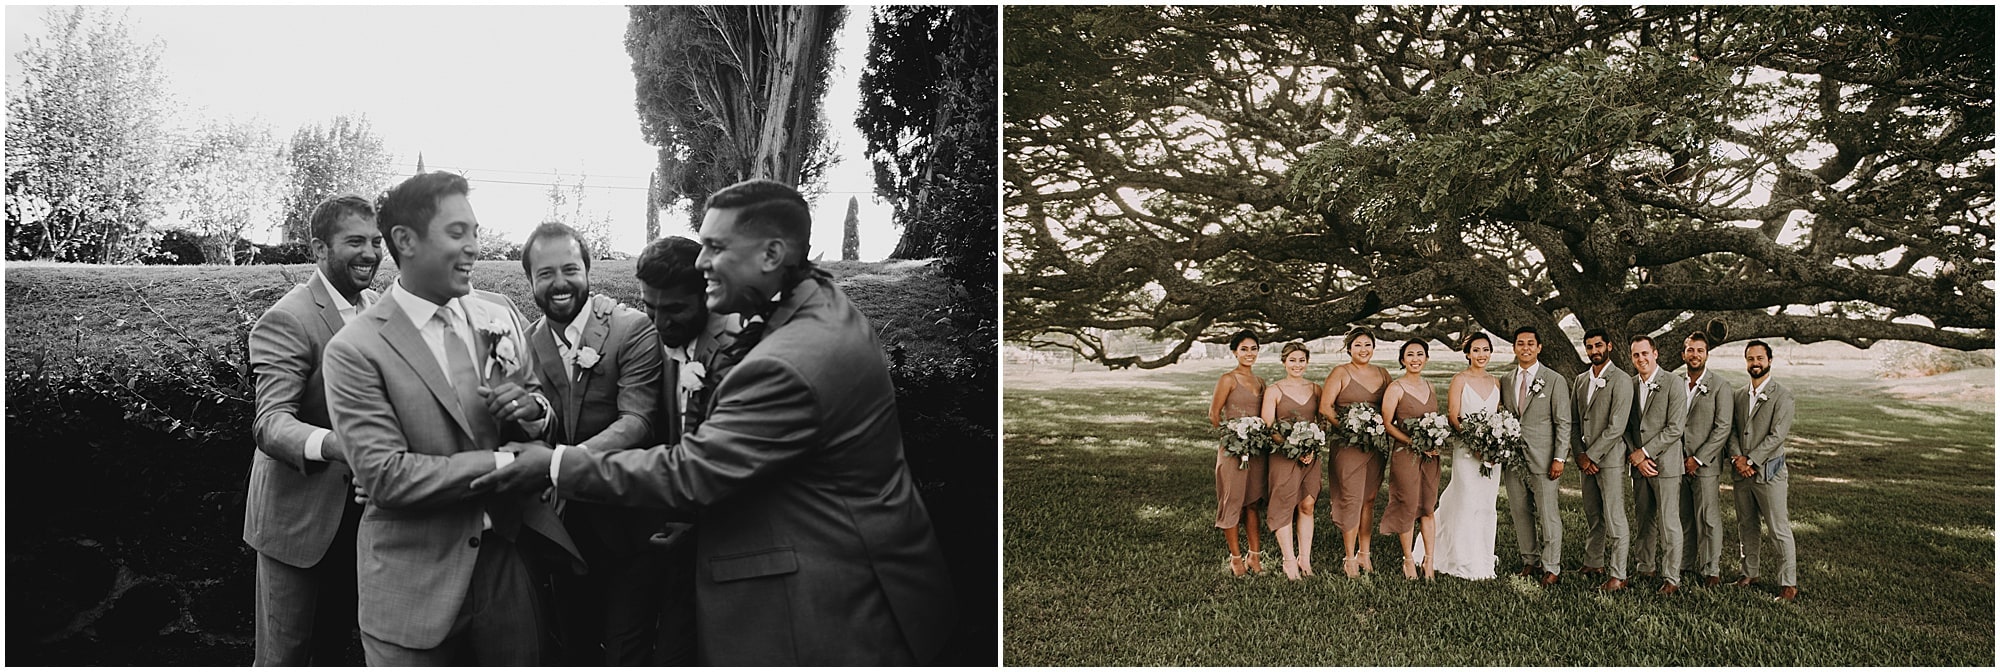 Maui wedding photography44